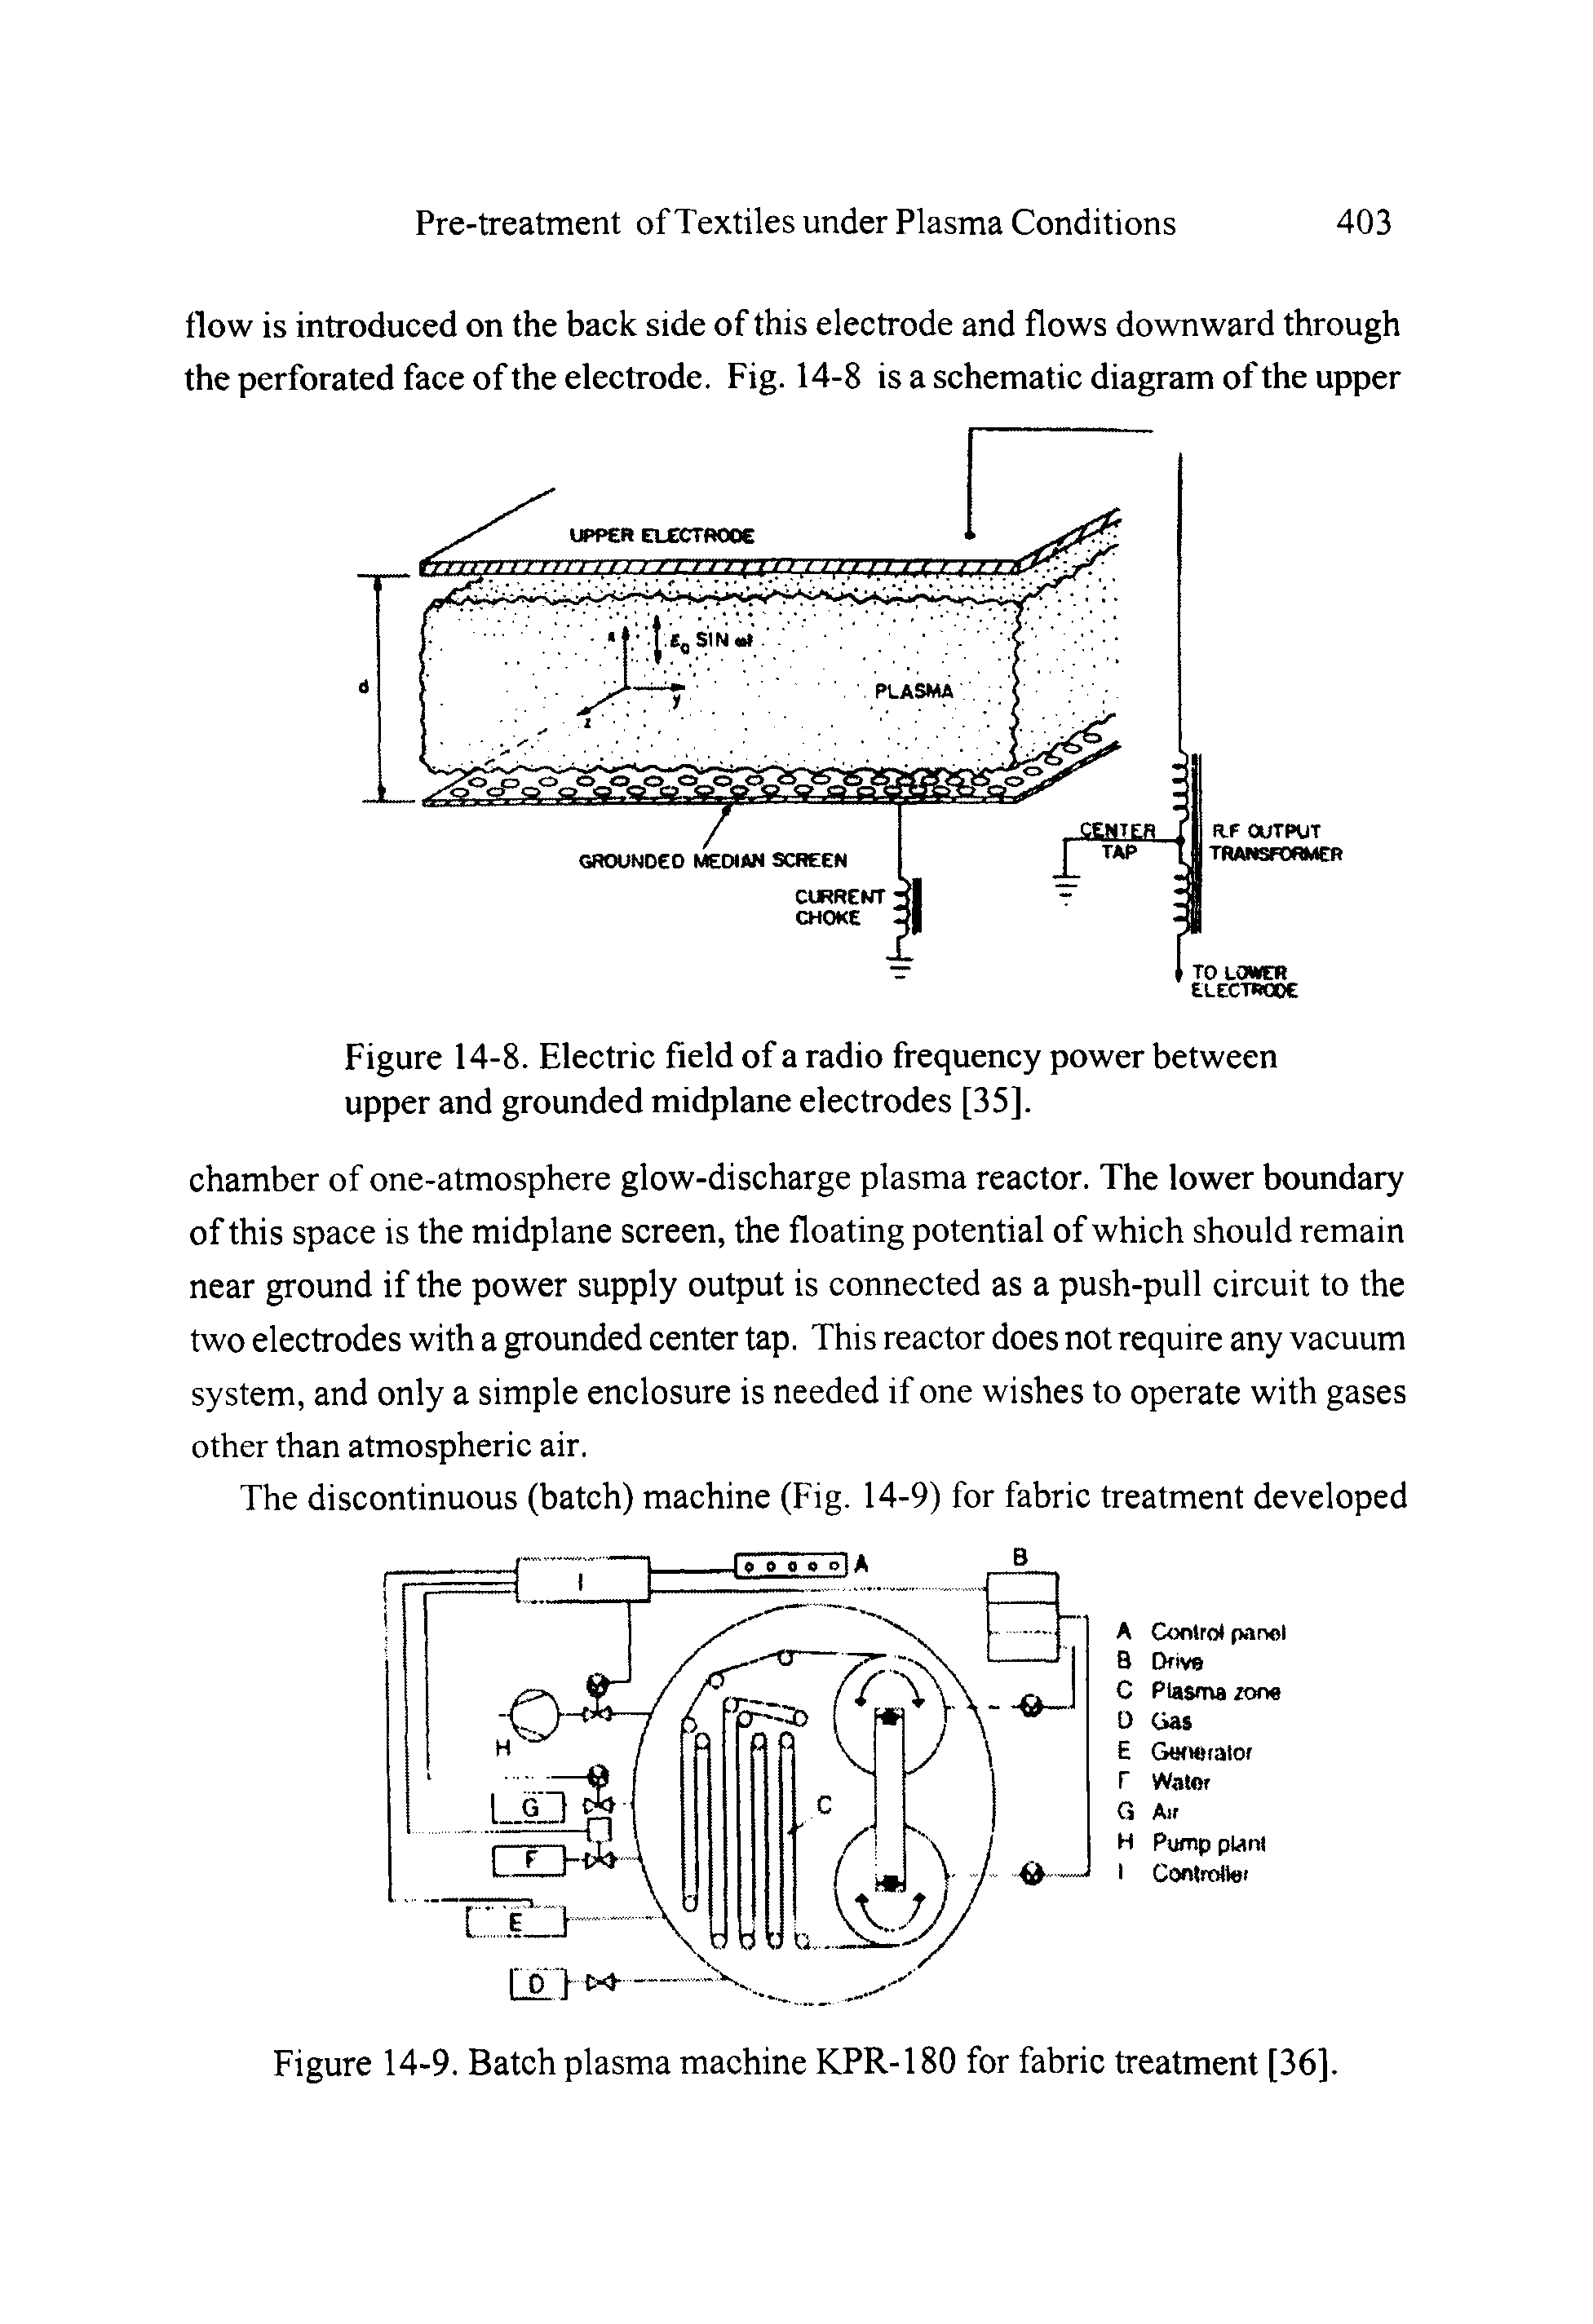 Figure 14-9. Batch plasma machine KPR-180 for fabric treatment [36].